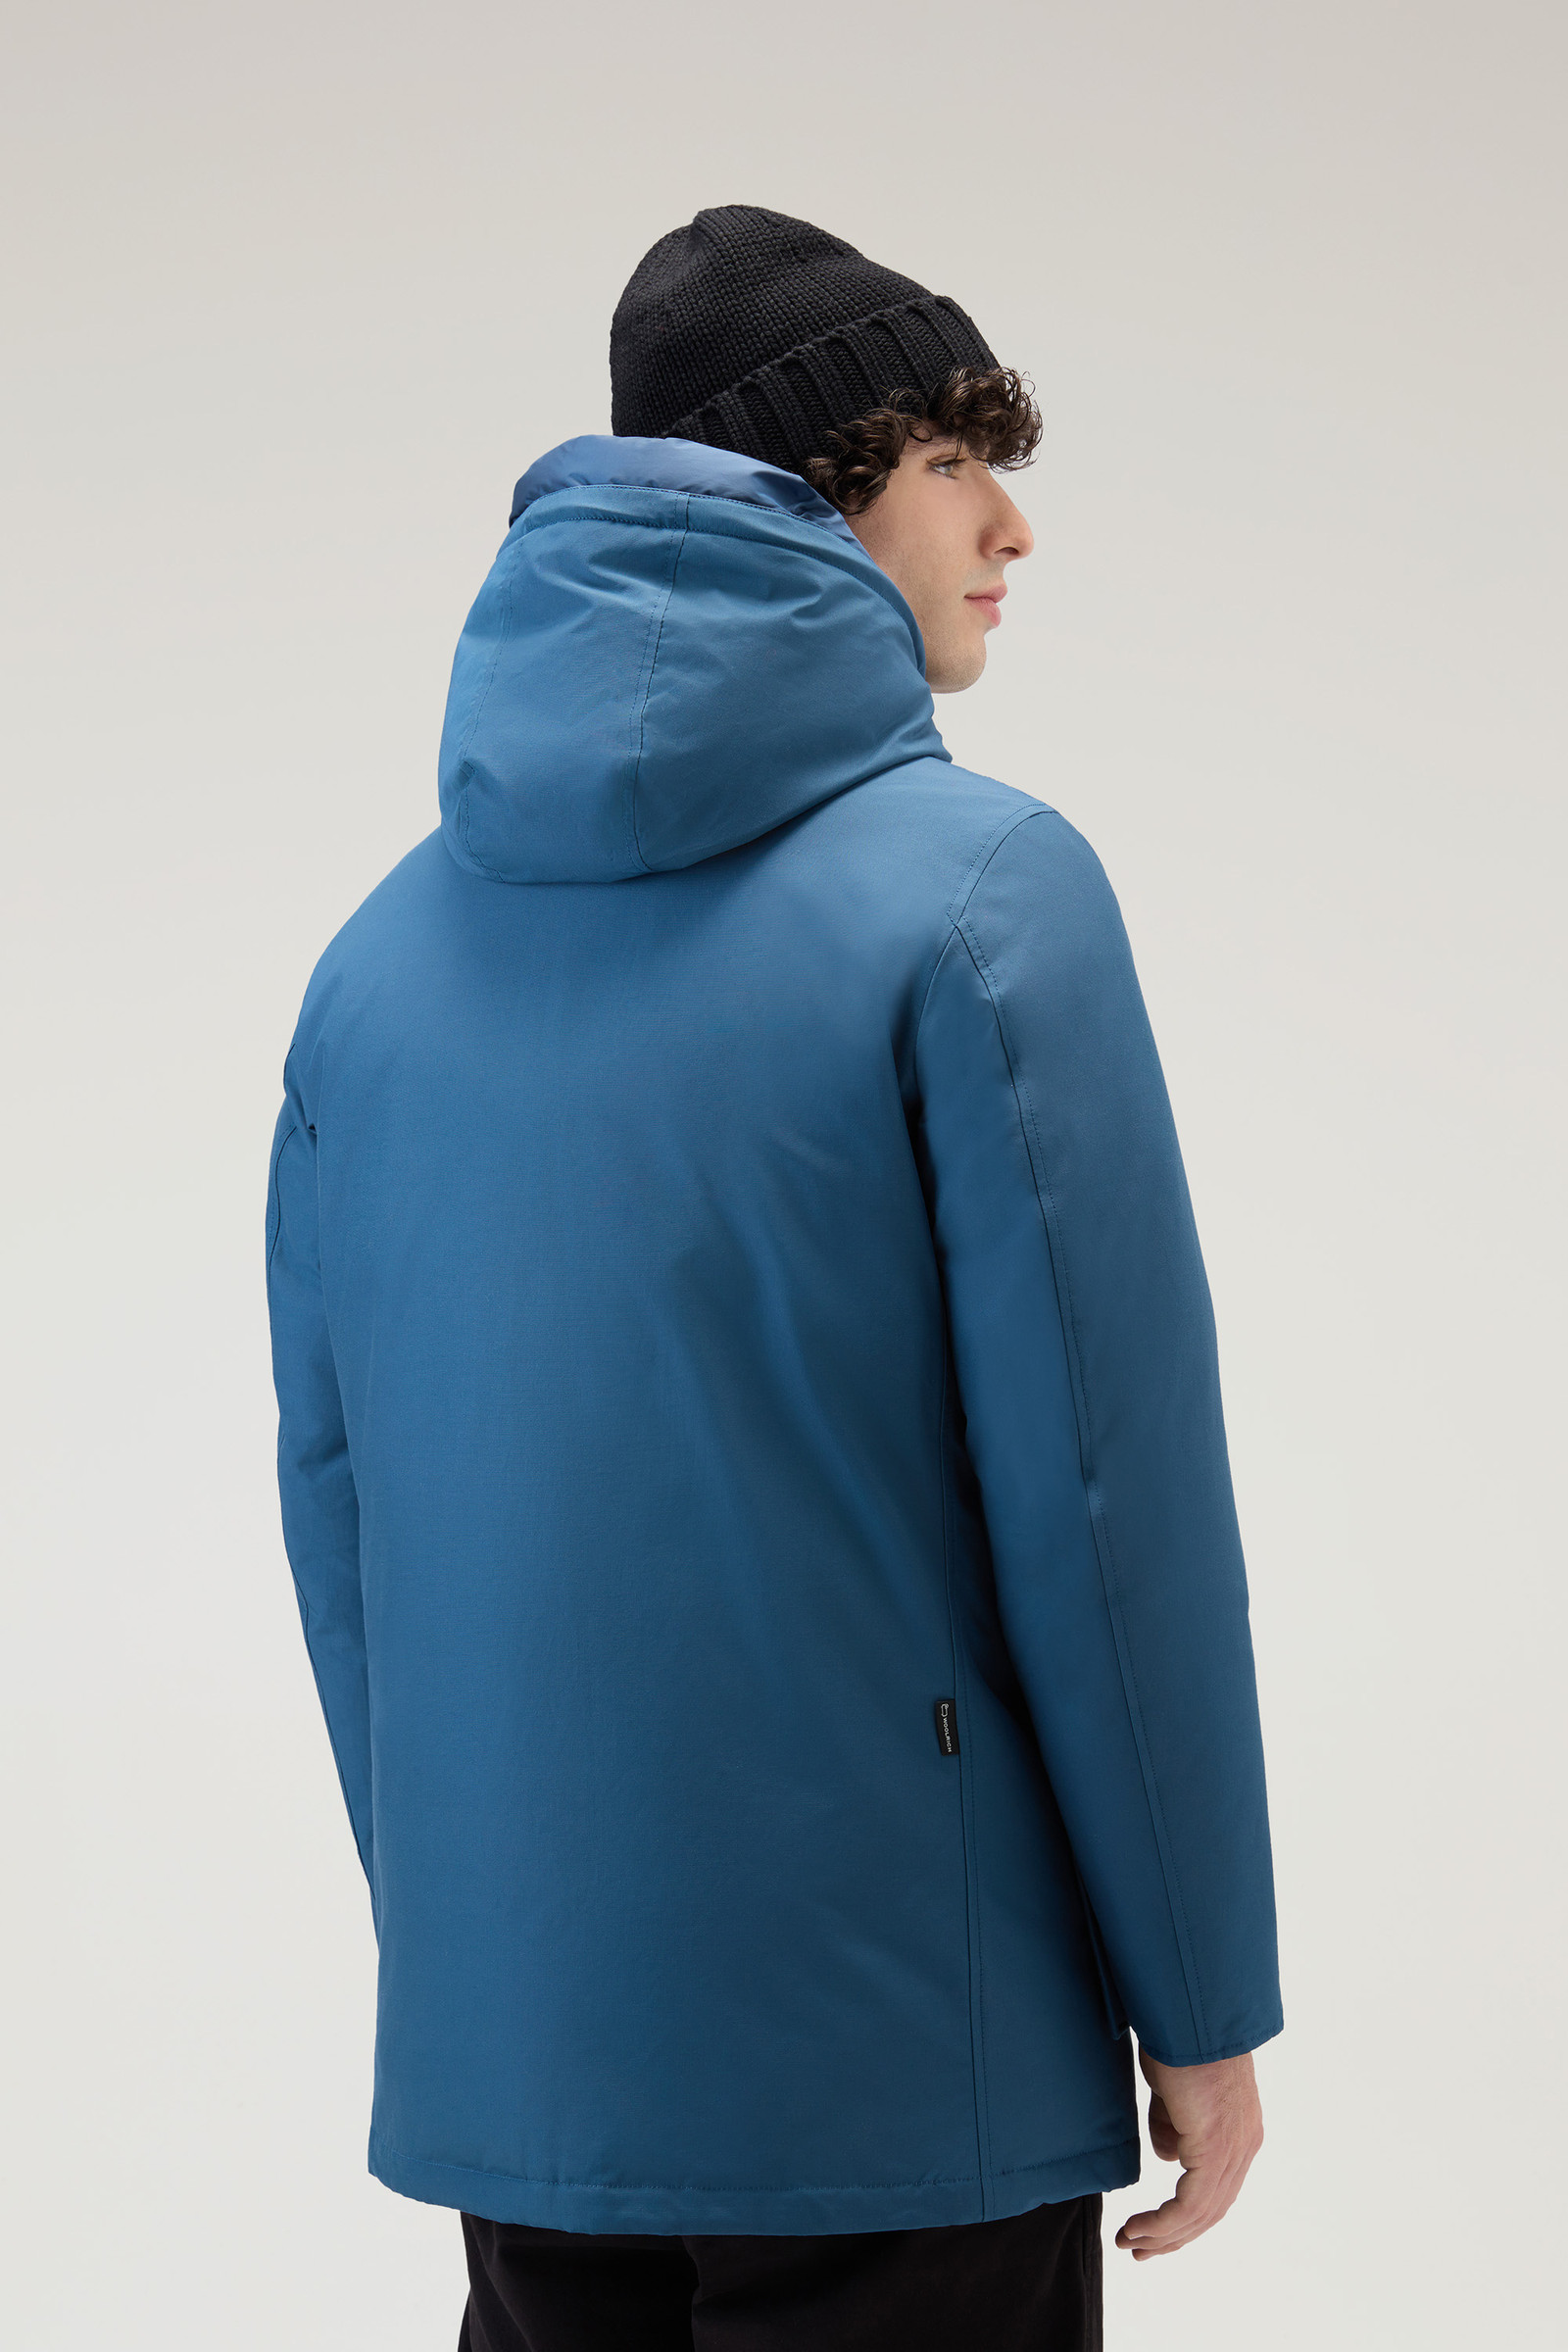 Men's Arctic Parka in Ramar Cloth Blue | Woolrich UK